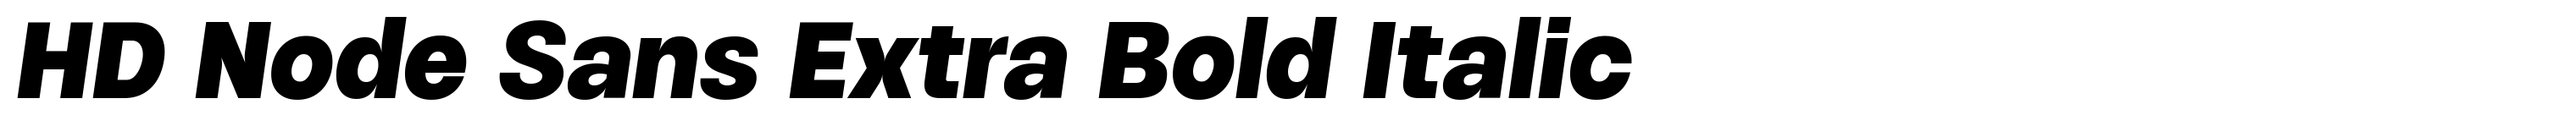 HD Node Sans Extra Bold Italic